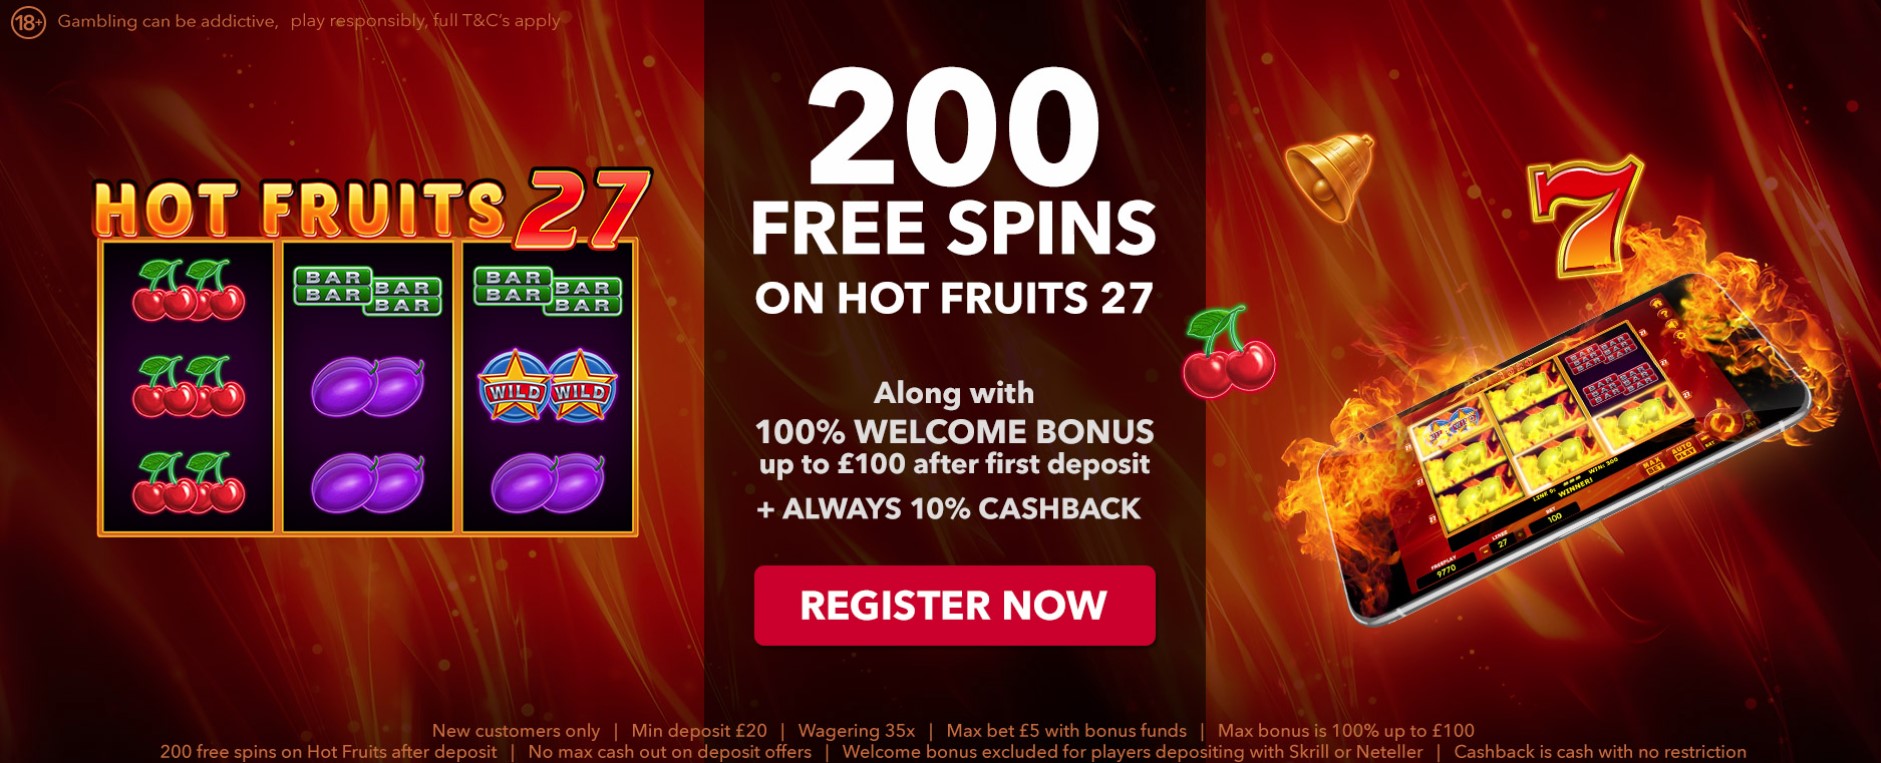 All British Casino Bonus Code